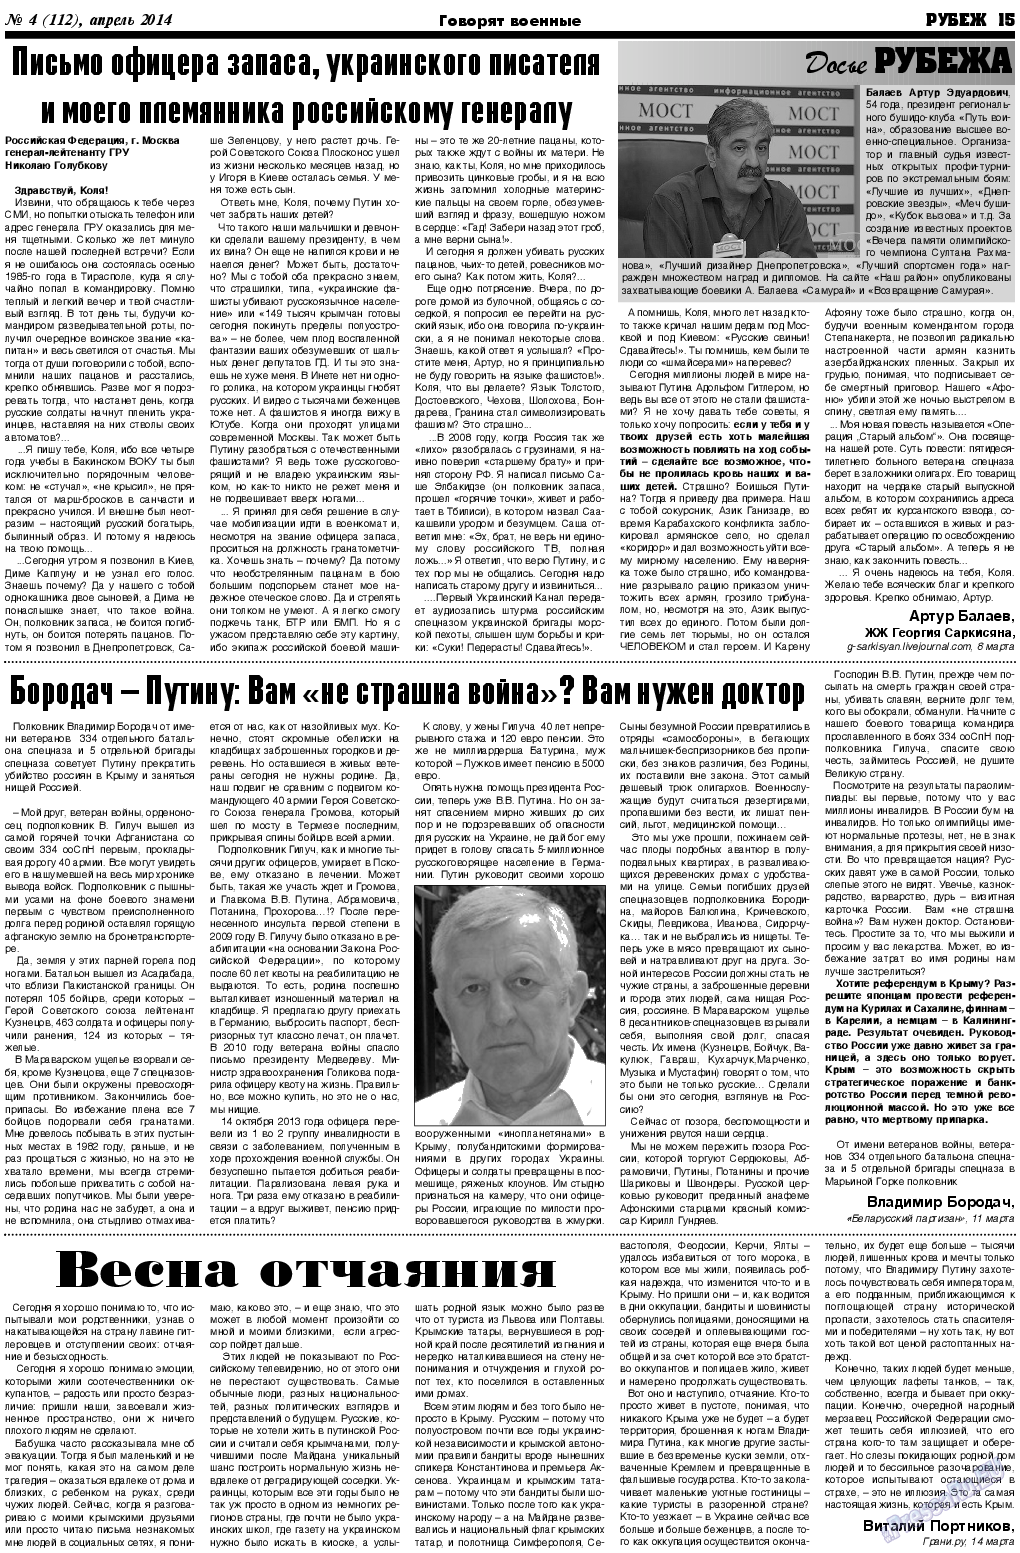 Рубеж, газета. 2014 №4 стр.15